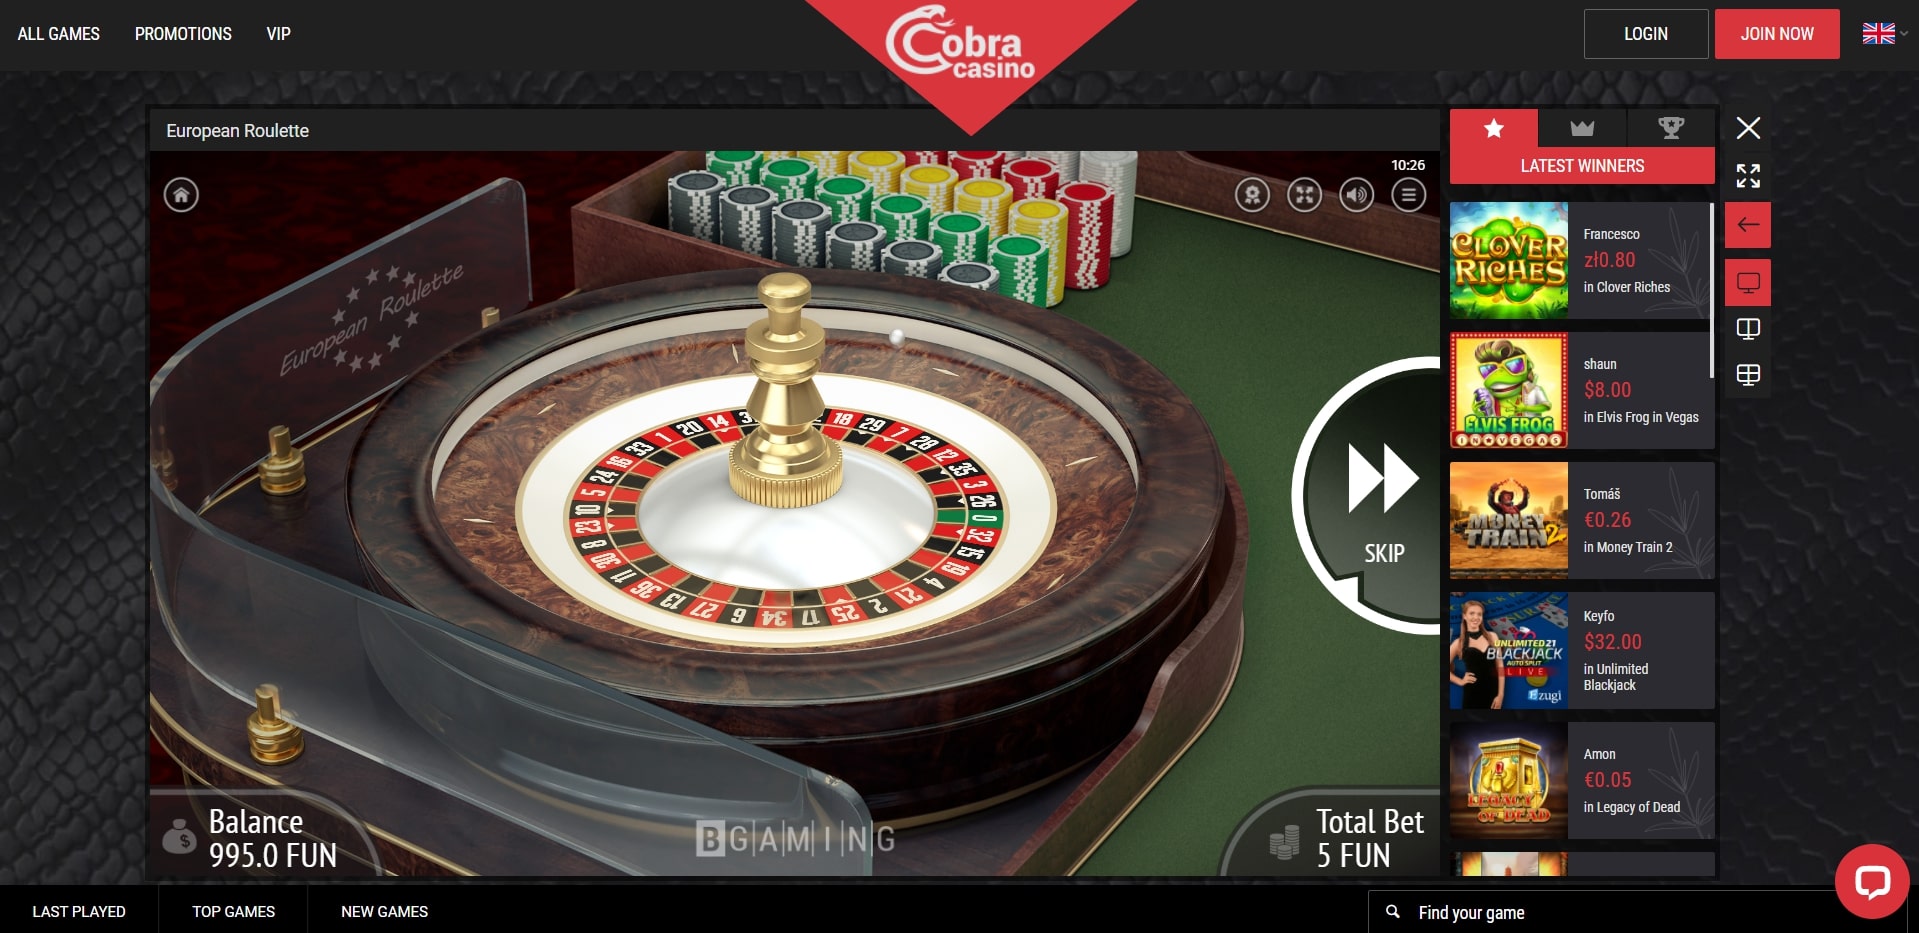 Cobra Casino Casino Games